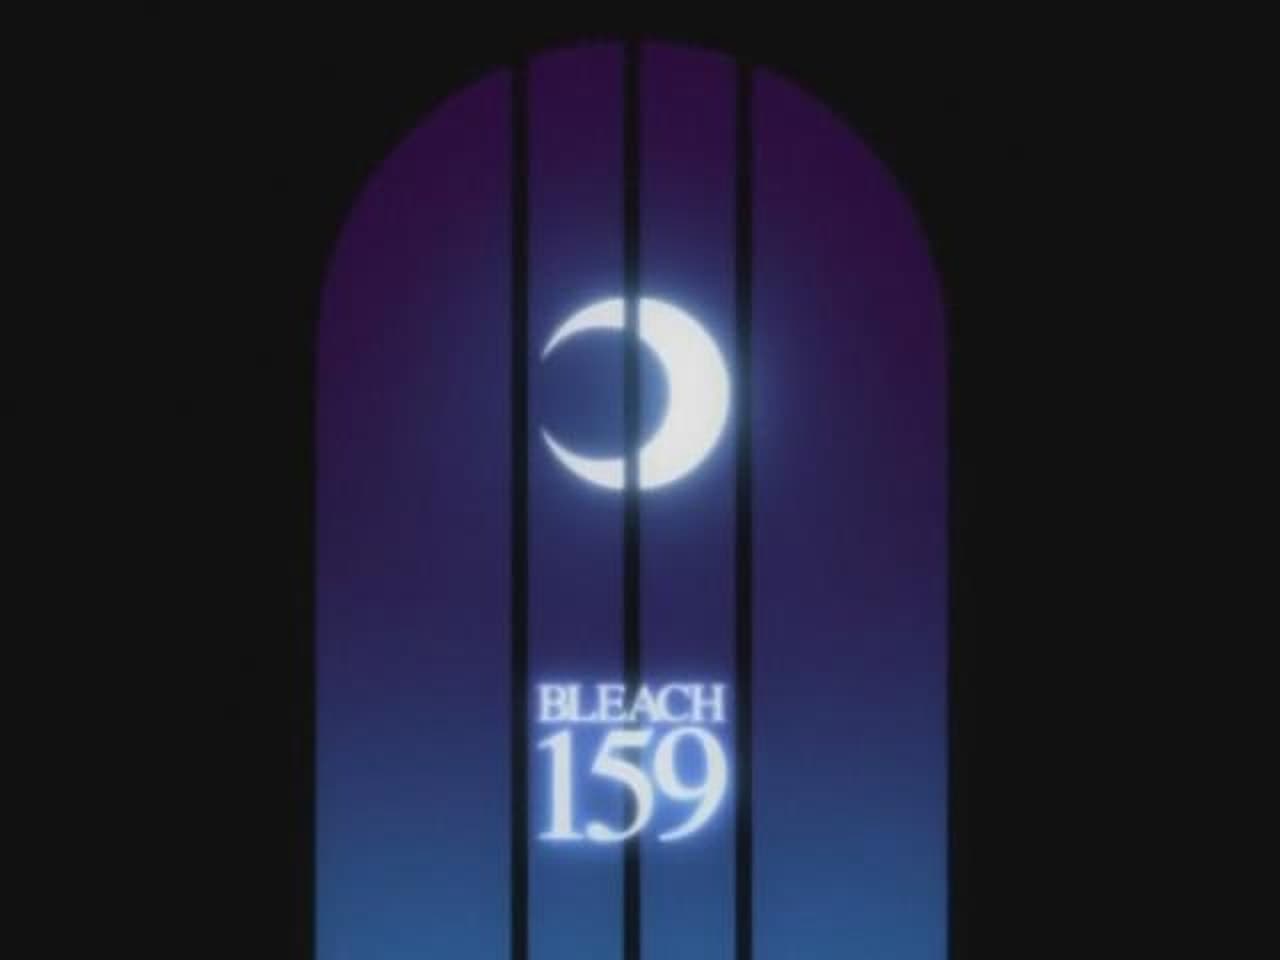 Bleach - Season 1 Episode 159 : Yasutora Sado Dies! Orihime's Tears